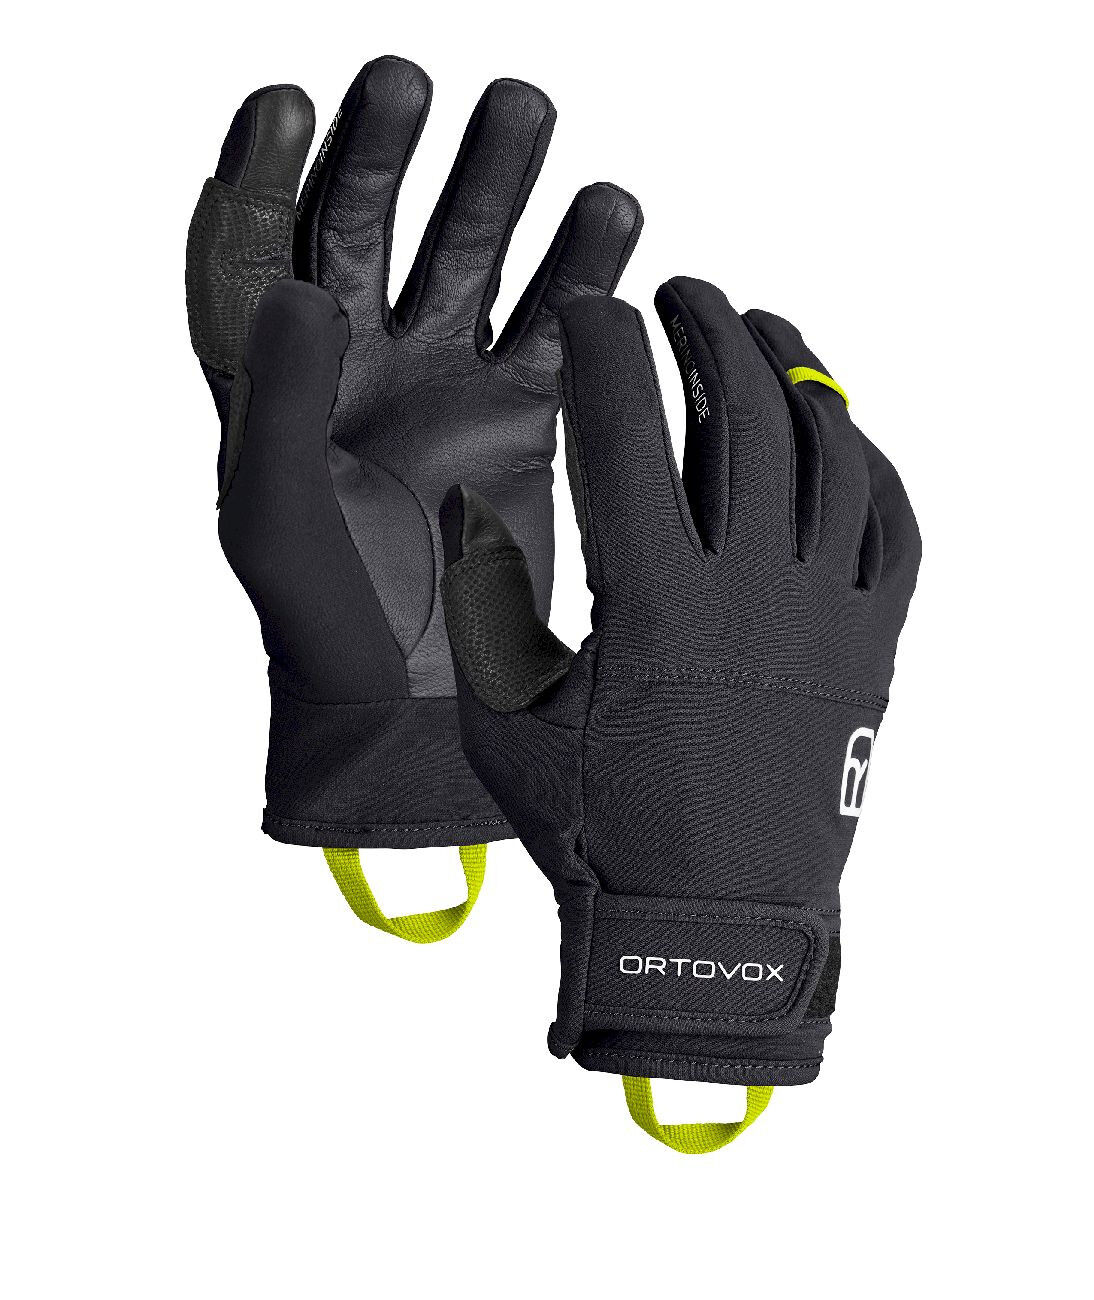 Ortovox Tour Light Glove - Skihandschuhe - Herren